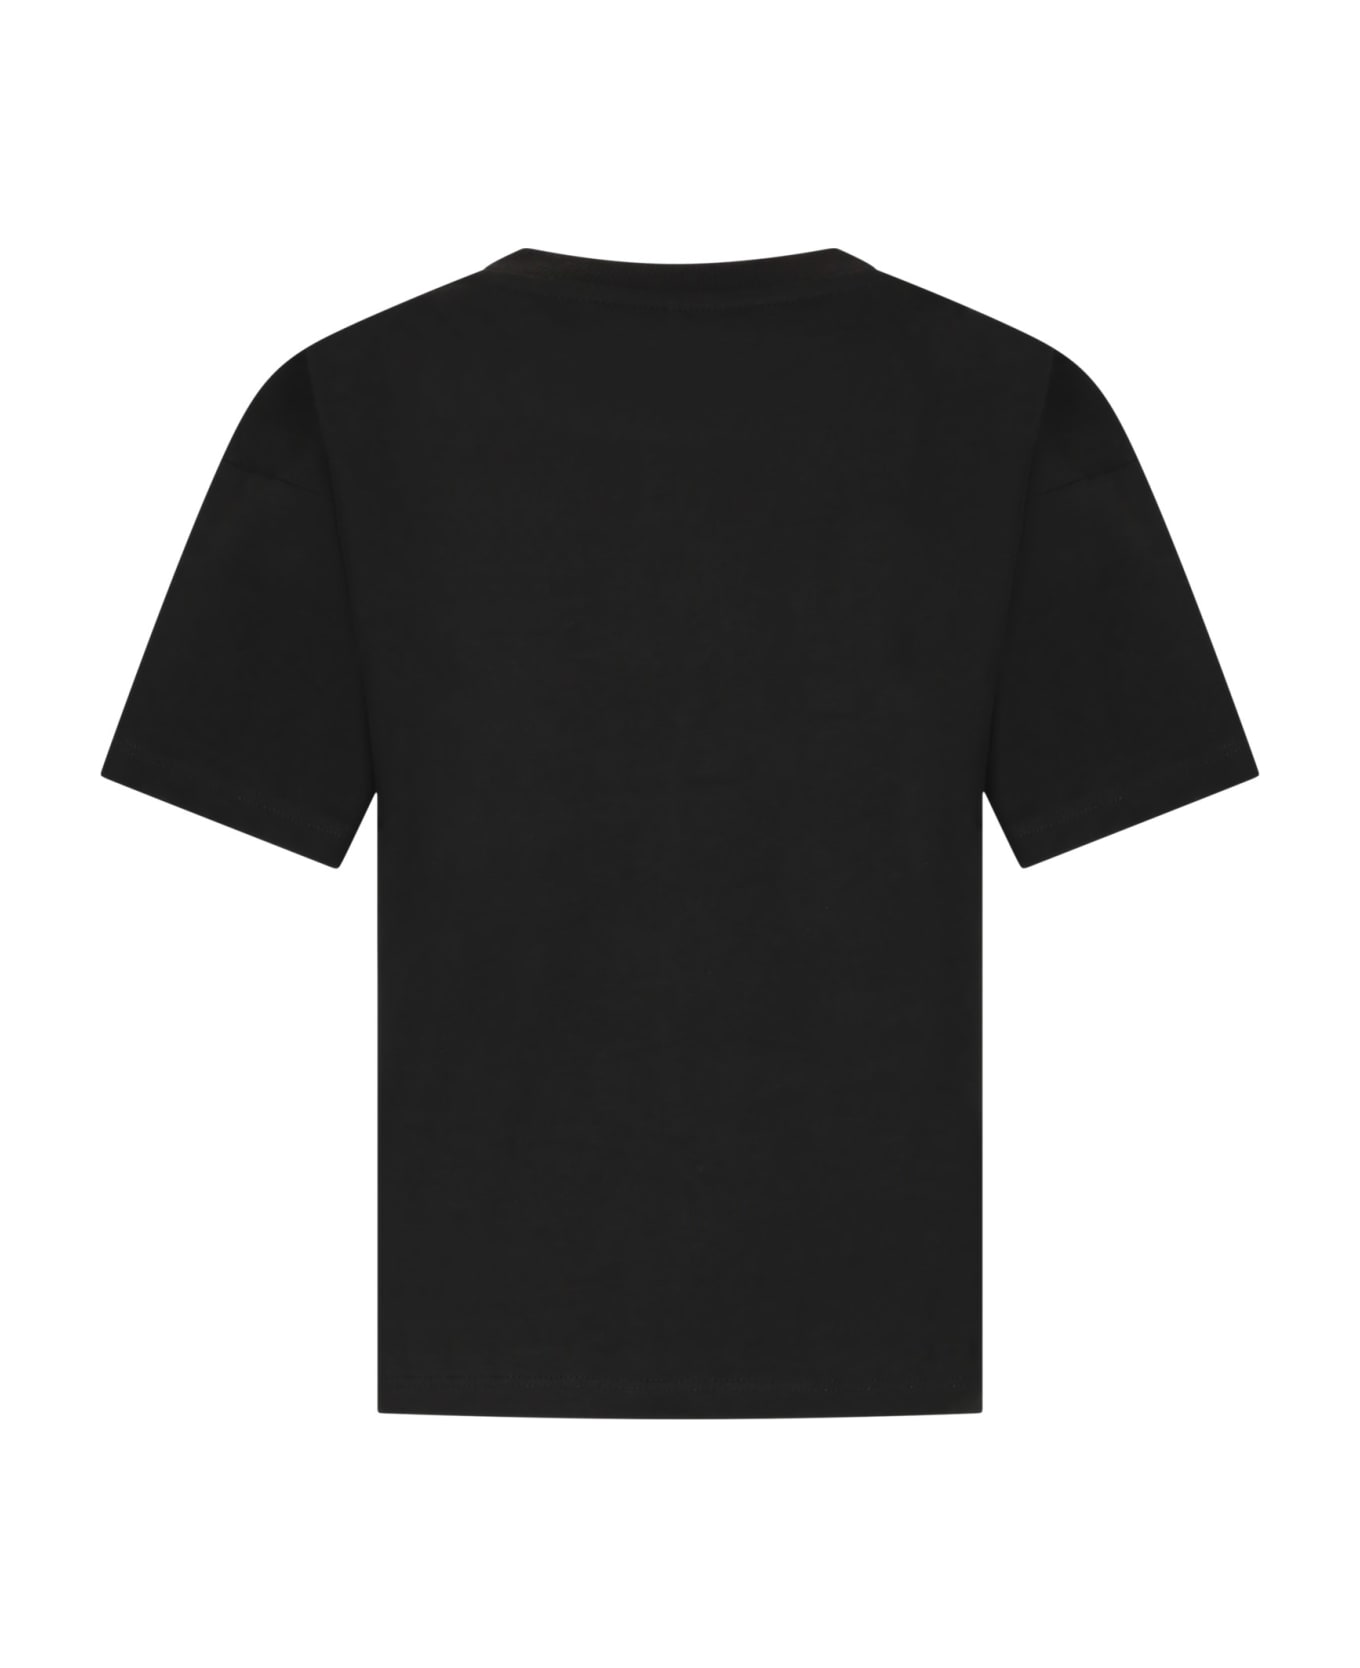 Mini Rodini Black T-shirt For Kids With Writing - Grey